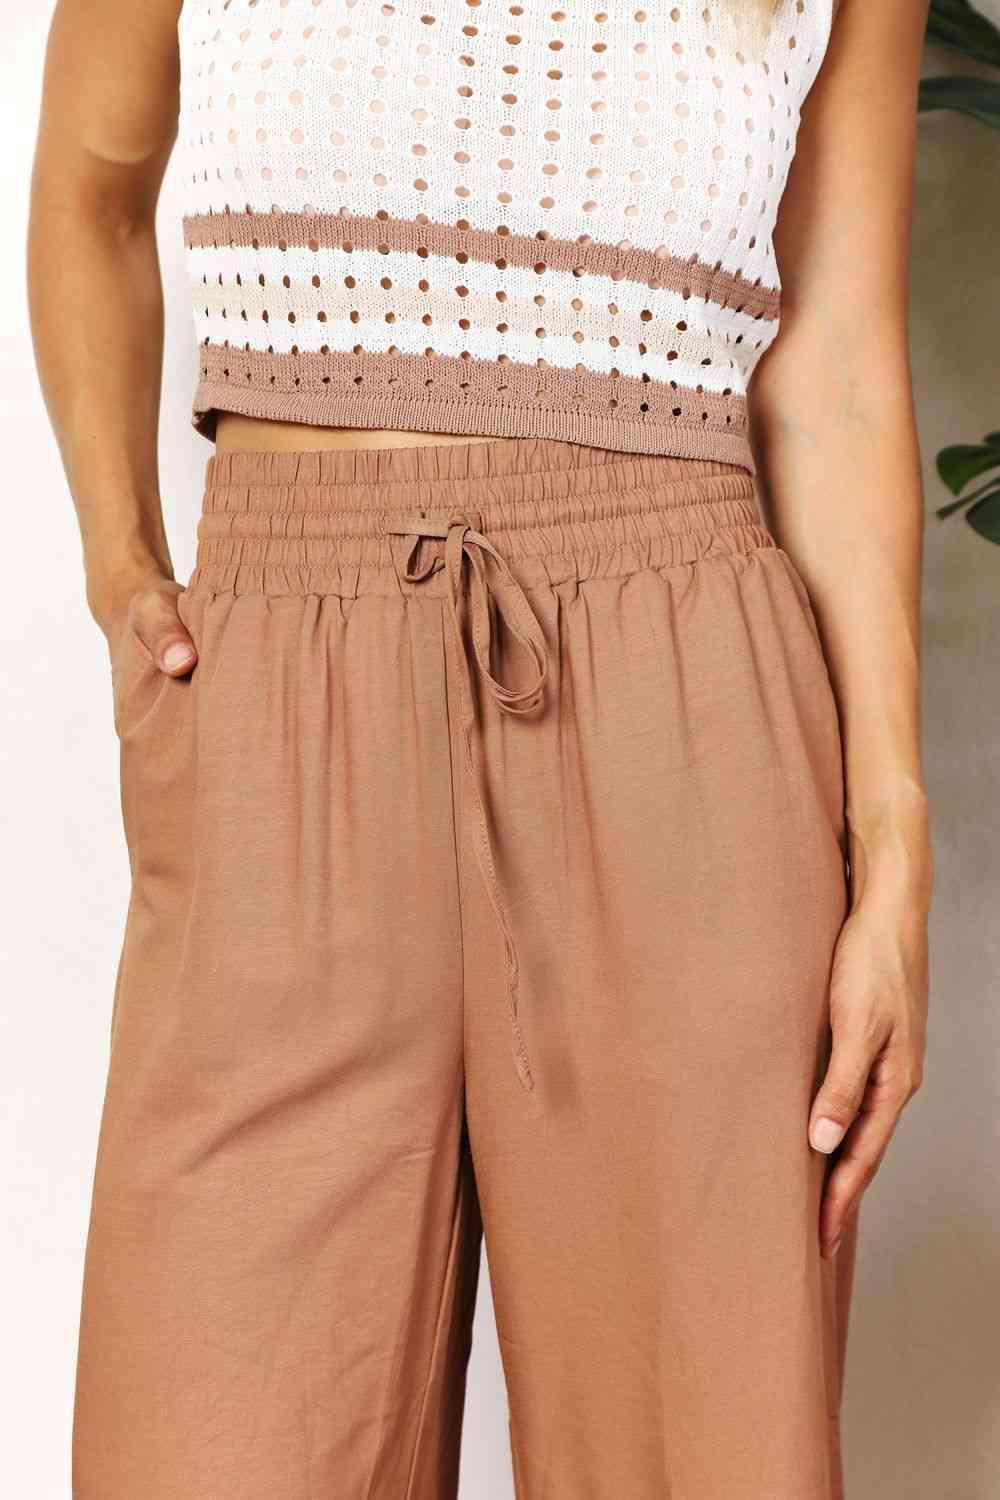 Bona Fide Fashion - Drawstring Smocked Waist Wide Leg Pants - Women Fashion - Bona Fide Fashion